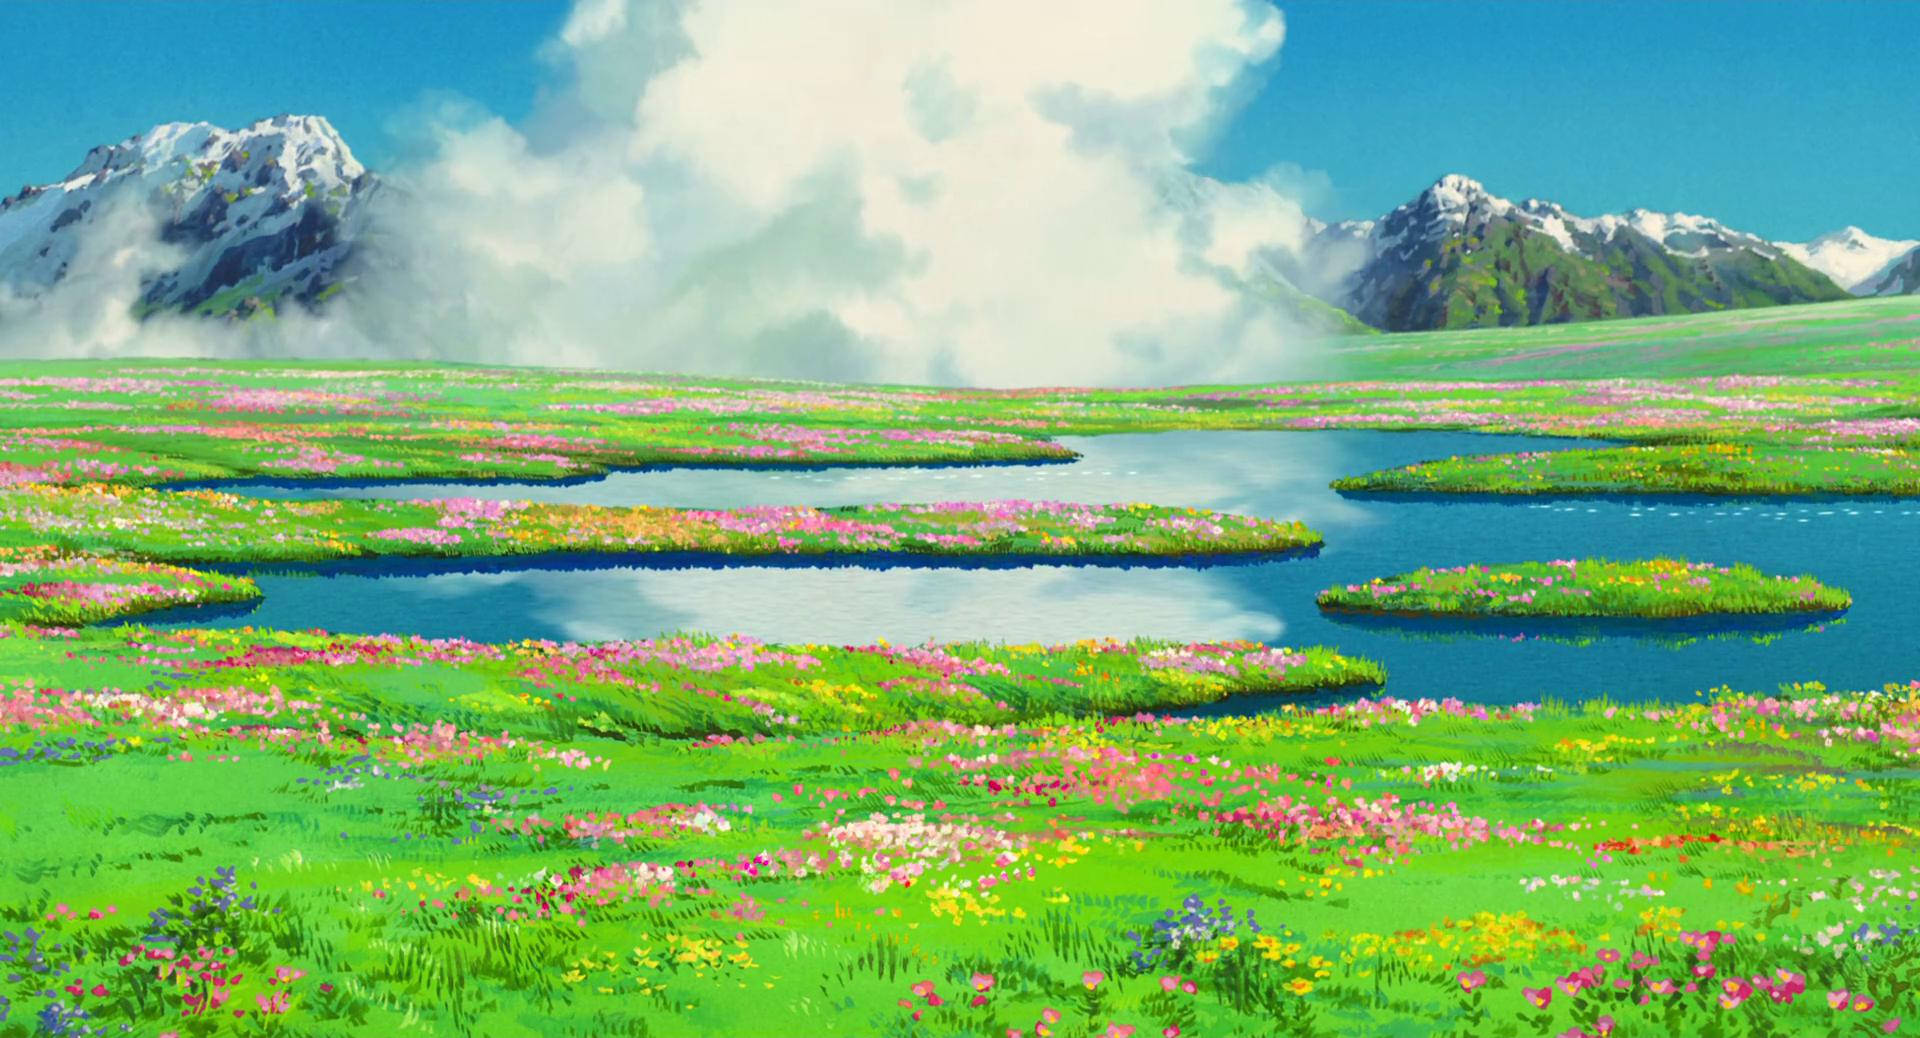 Studio Ghibli 1920X1038 Wallpaper and Background Image